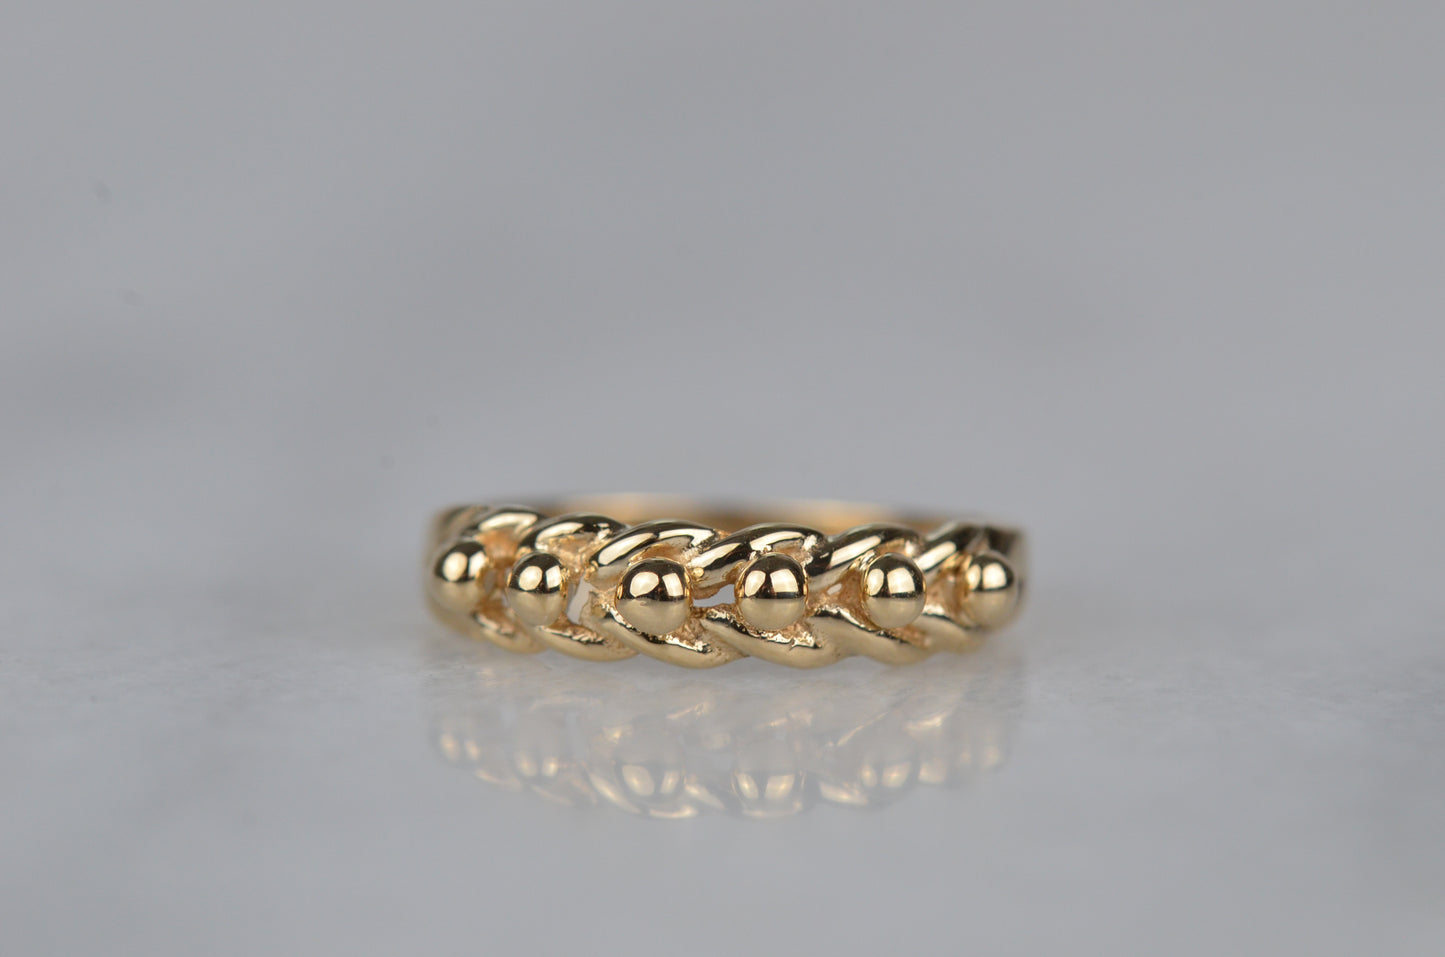 Antique-Inspired Vintage Keeper Ring